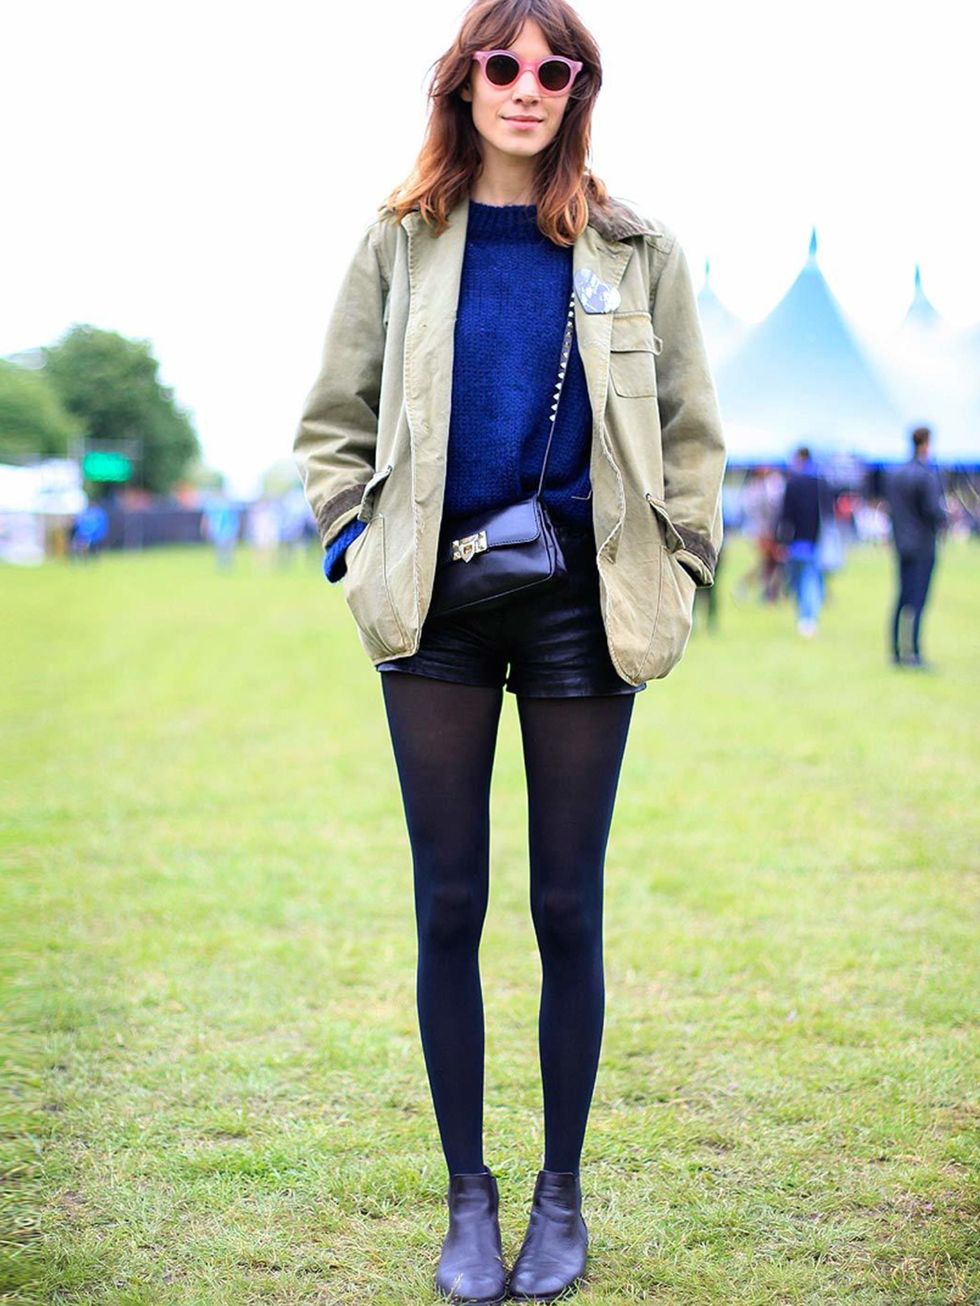 <p>Alexa Chung, 28, cultural chameleon. Vintage jacket, Valentino bag, Philip Lim shorts.</p><p>Photo by Silvia Olsen @ Anthea Simms</p>